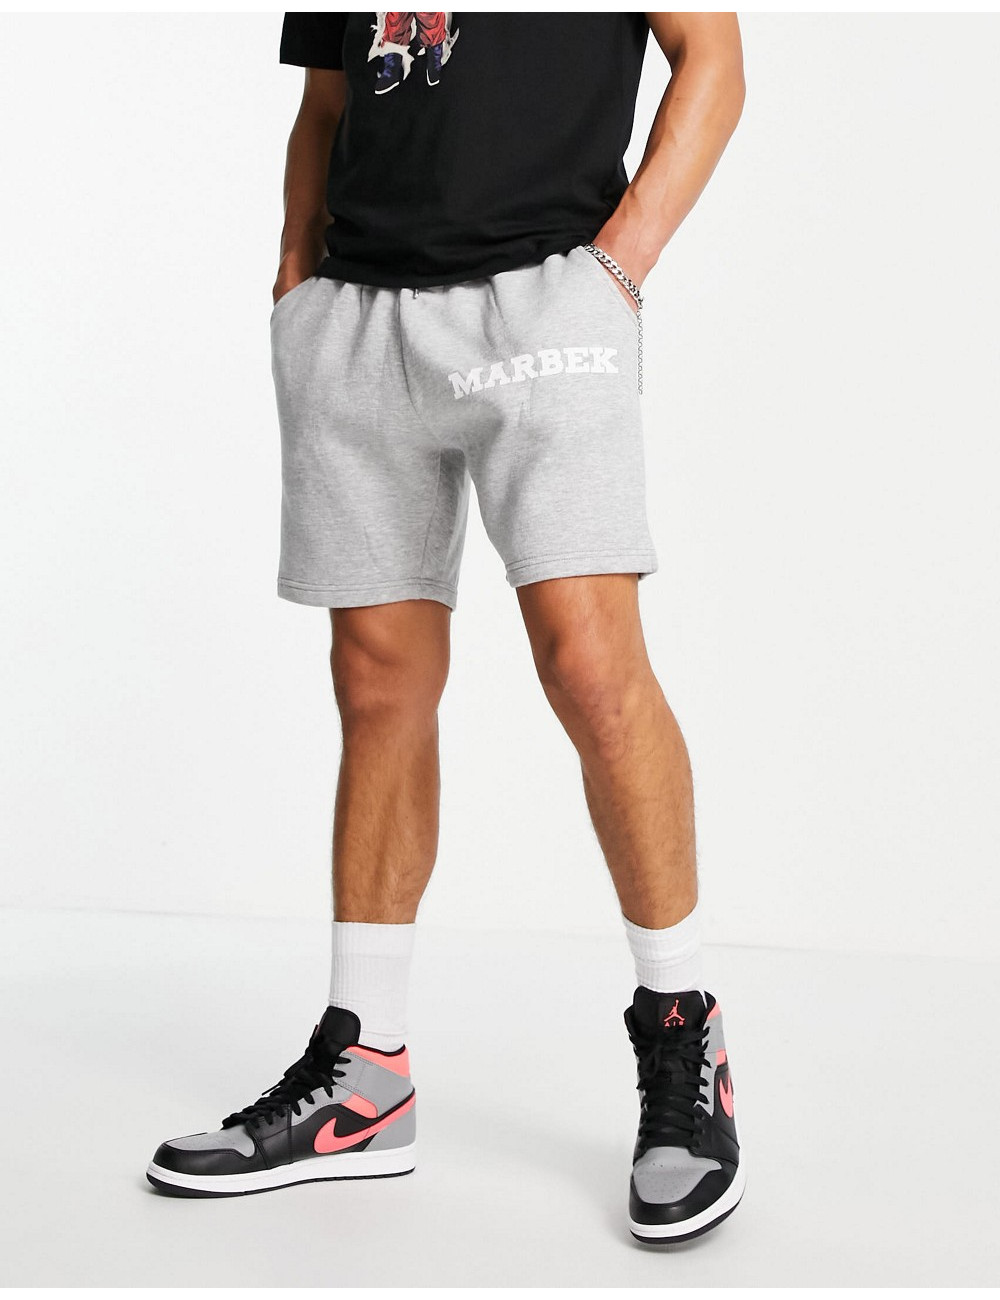 Marbek logo shorts in grey